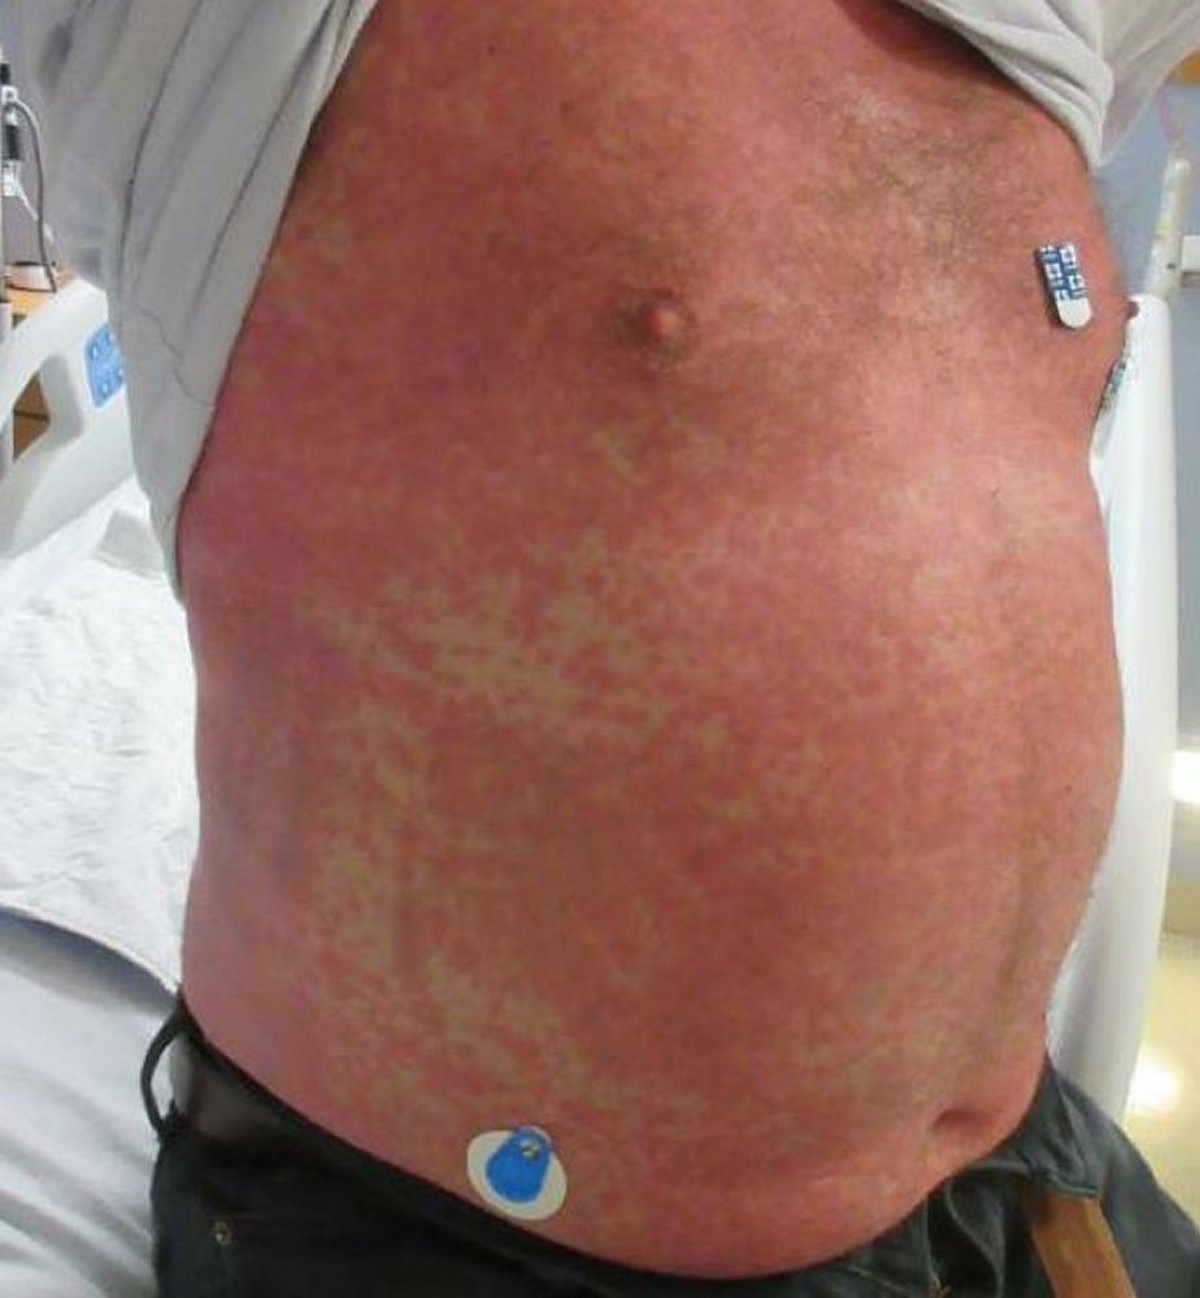 Eruzione cutanea causata da una reazione a un farmaco (torso)